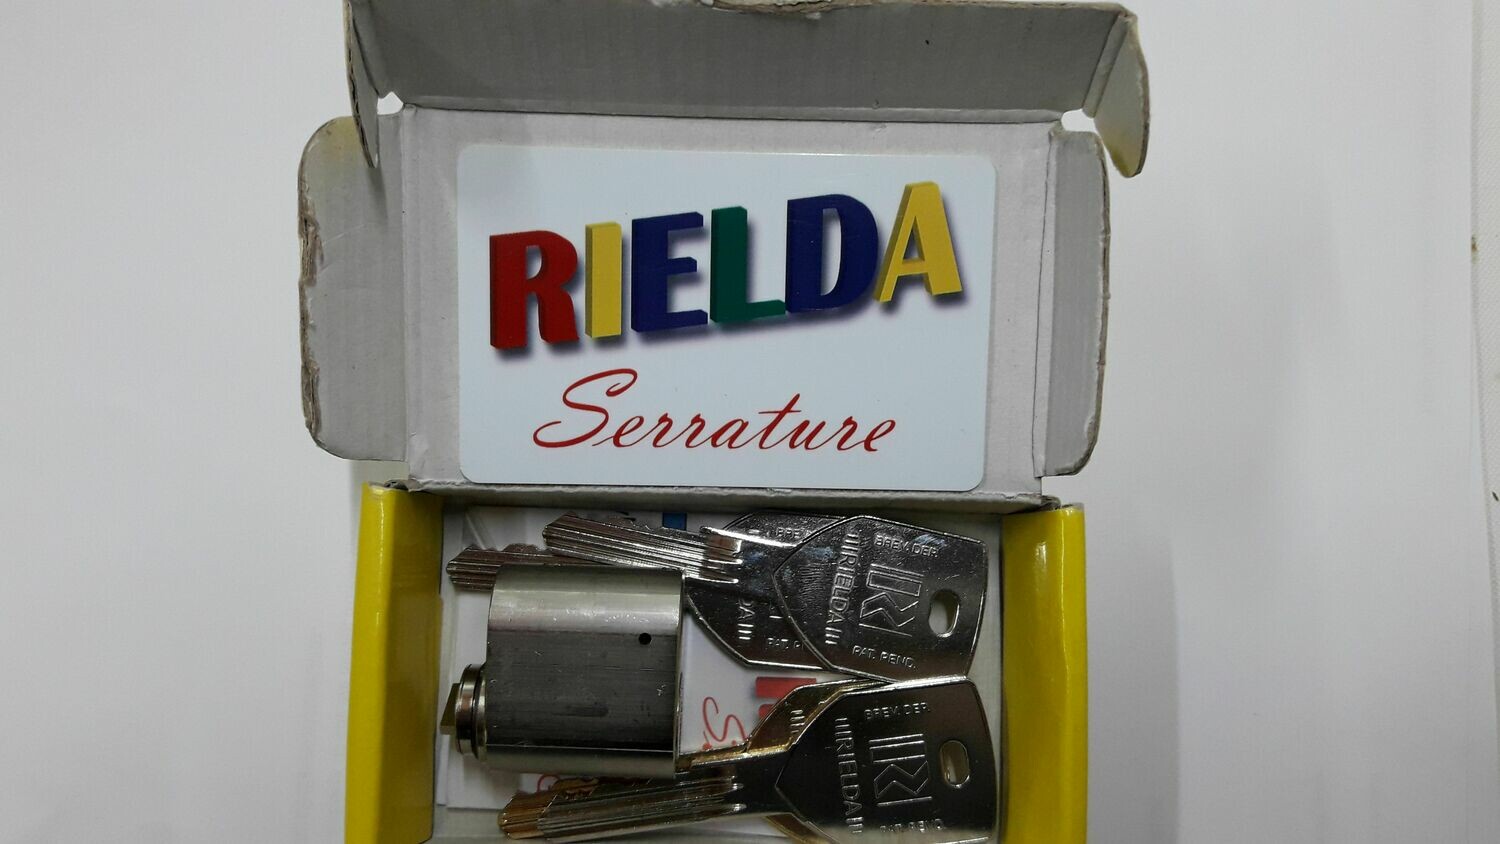 Rielda RS 3 3800-143 kit 1+3